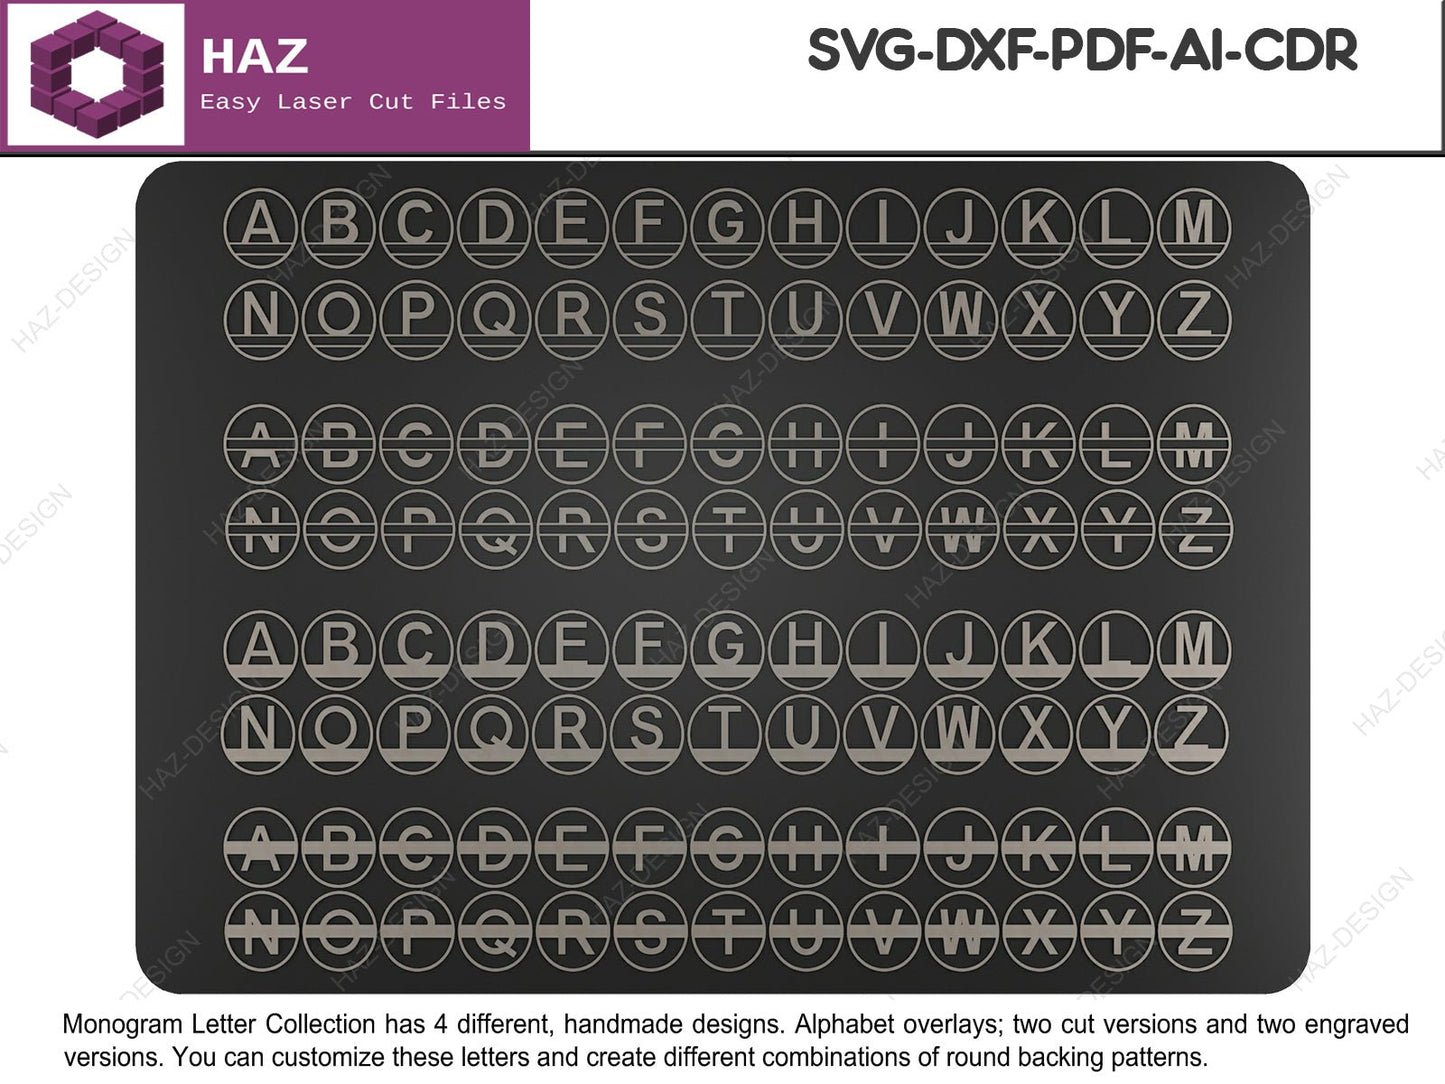 01 Alphabet Monogram Pattern Bundle / 36 Backer Pattern Designs Included / Customizable Letter Designs SVG Ai DXF CDR 080